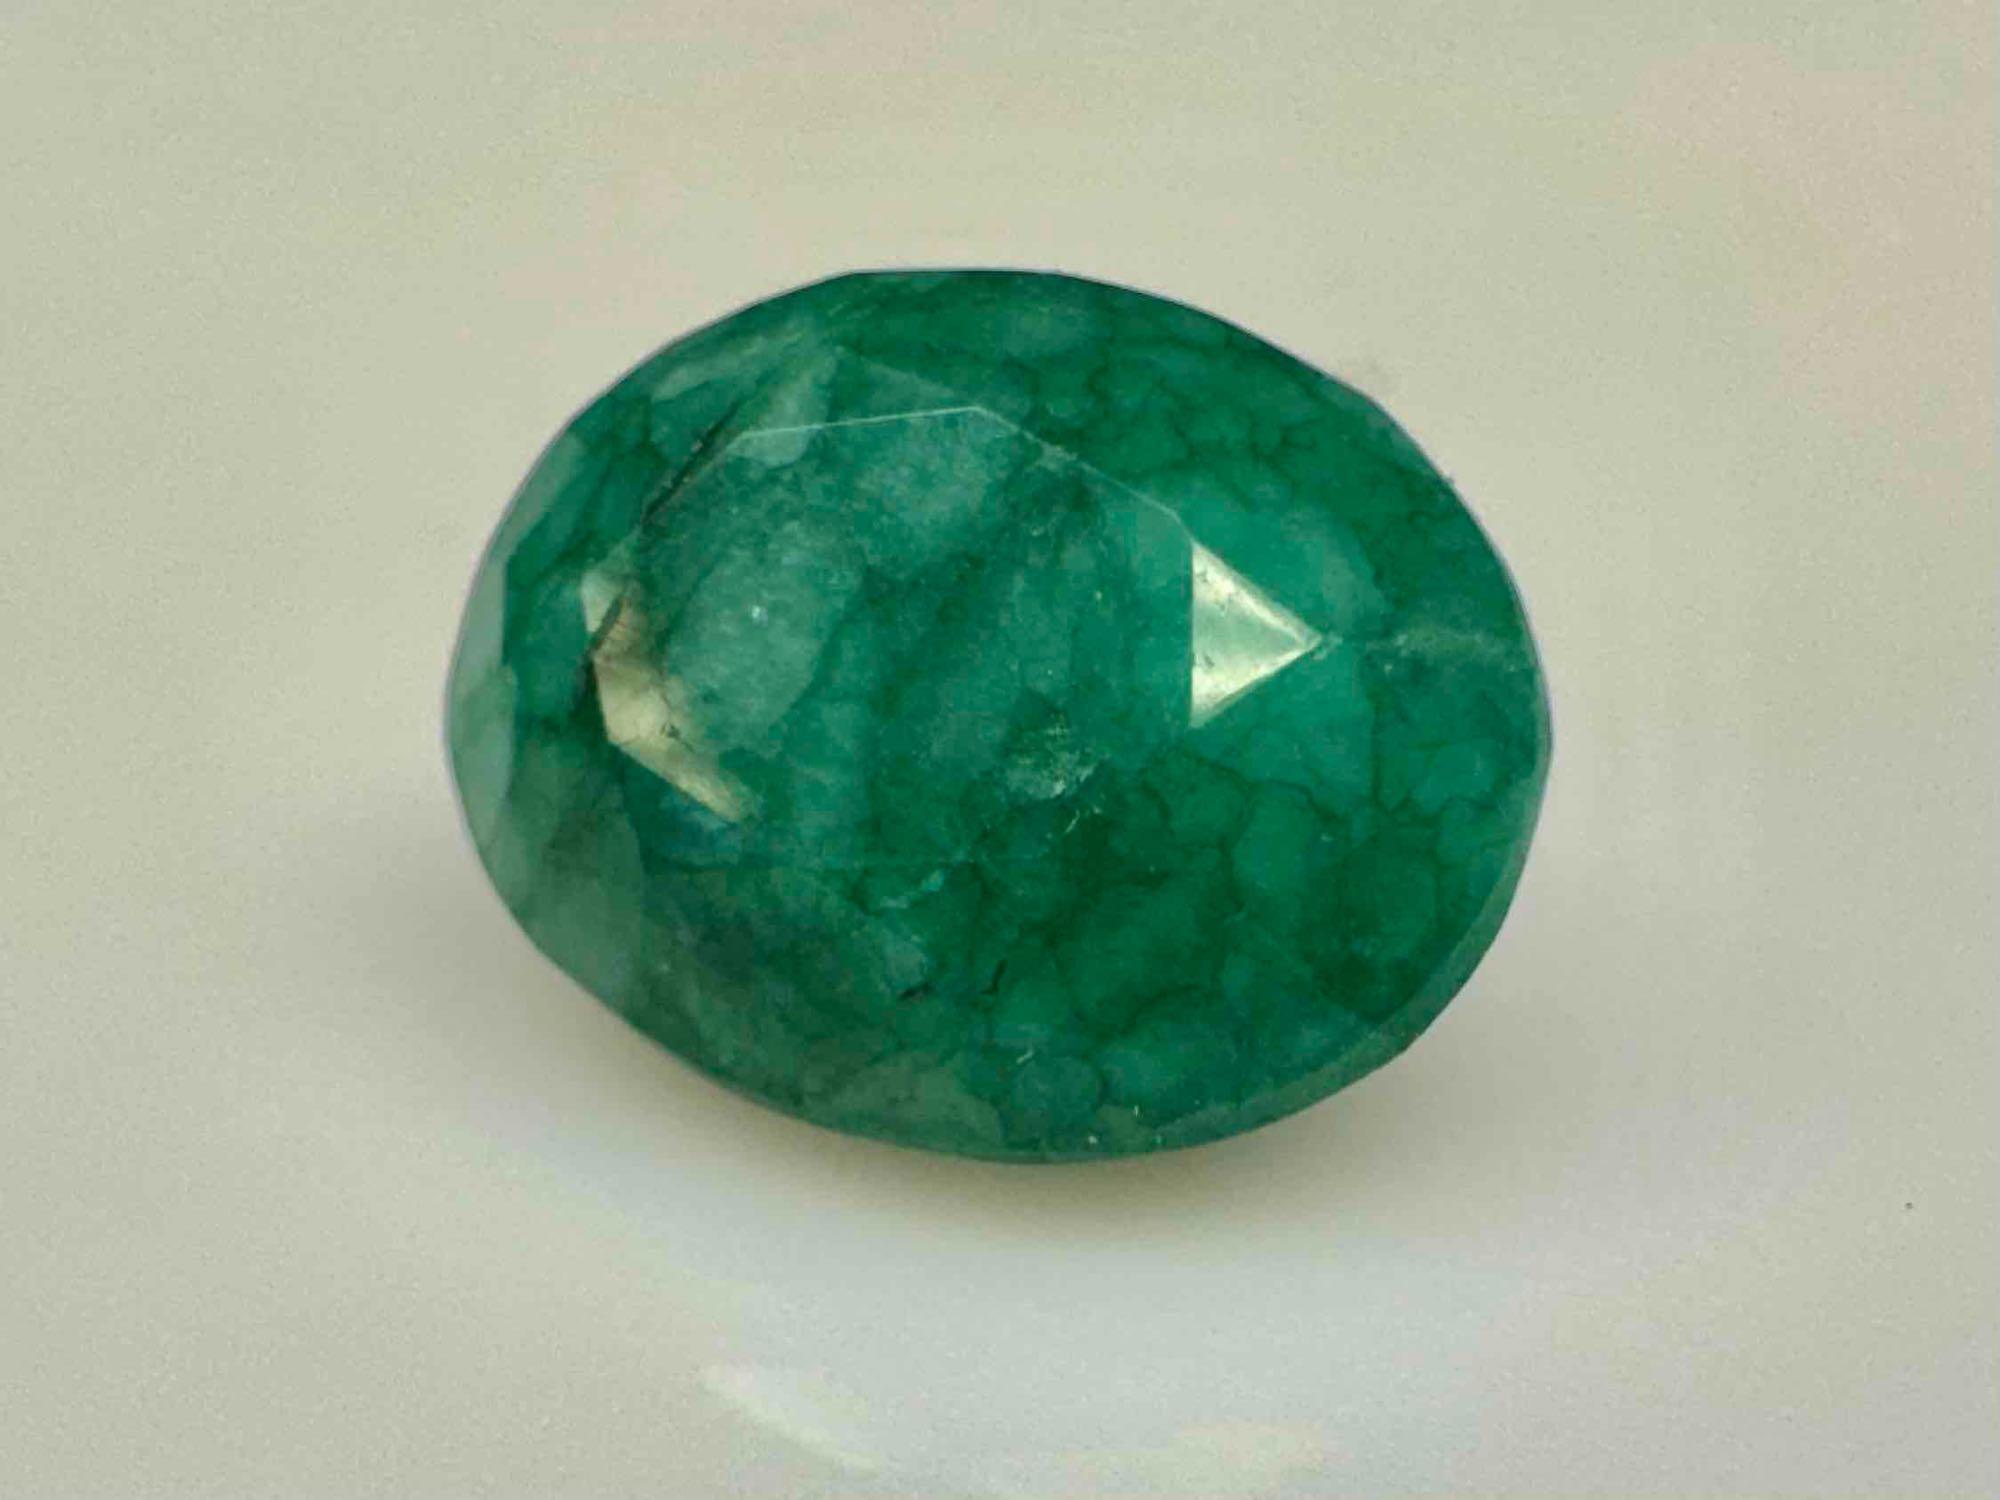 10.9ct Oval Cut Opaque Emerald Gemstone